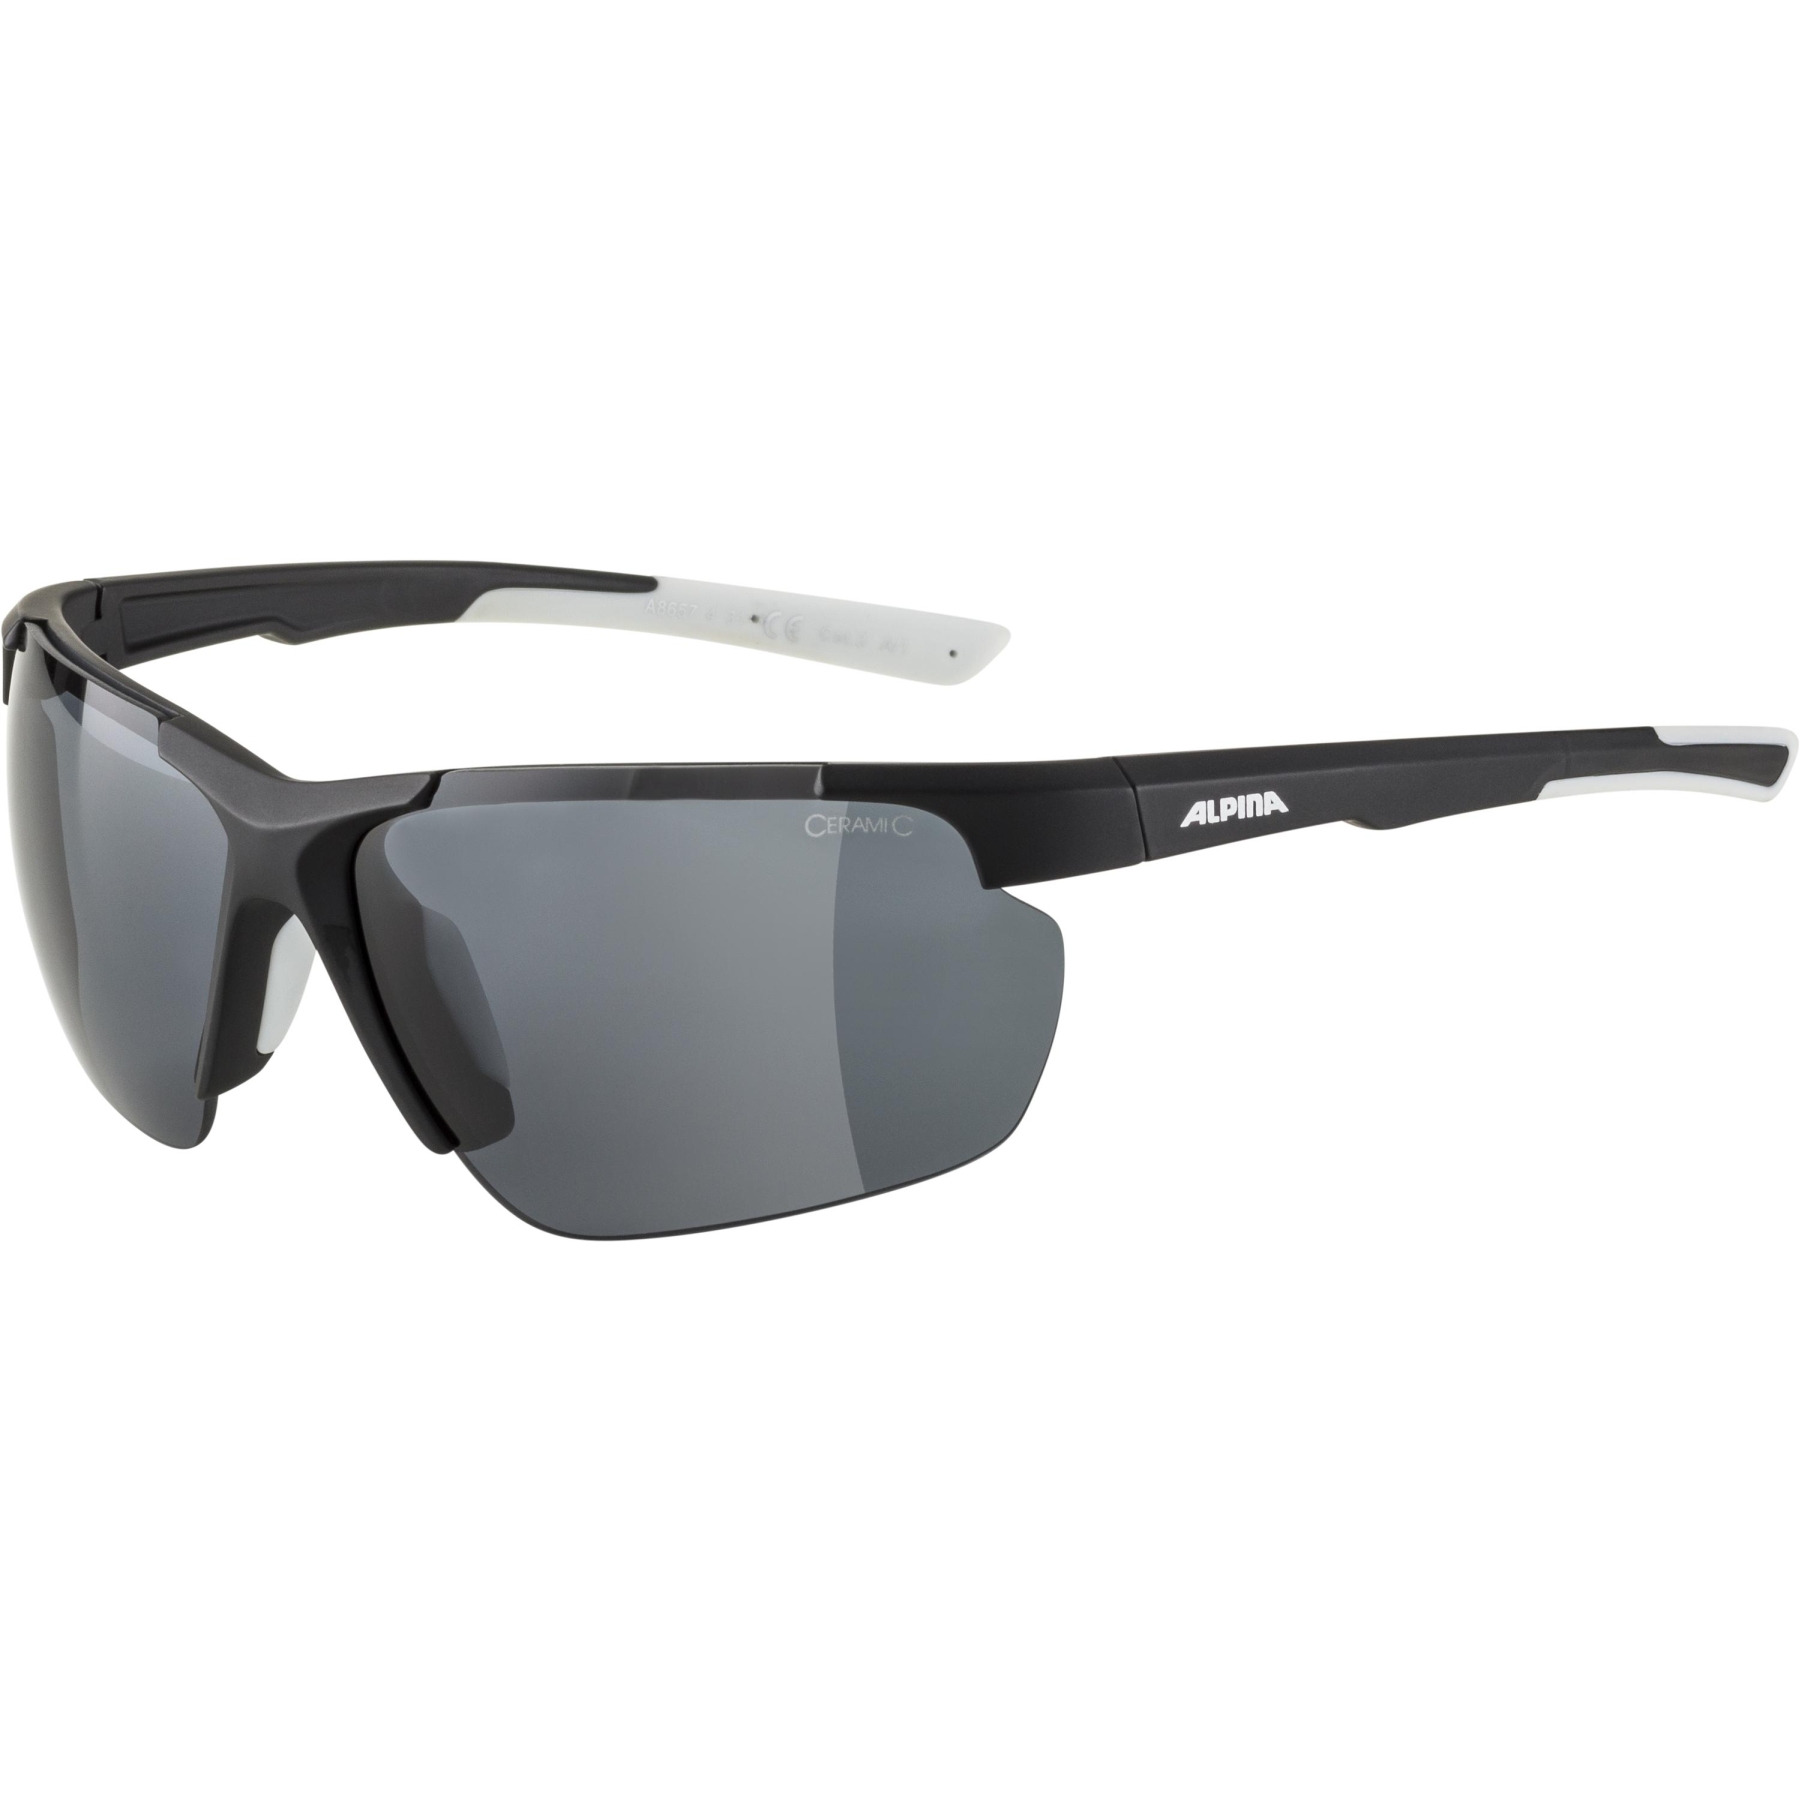 Productfoto van Alpina Defey HR Glasses - black matt-white / black